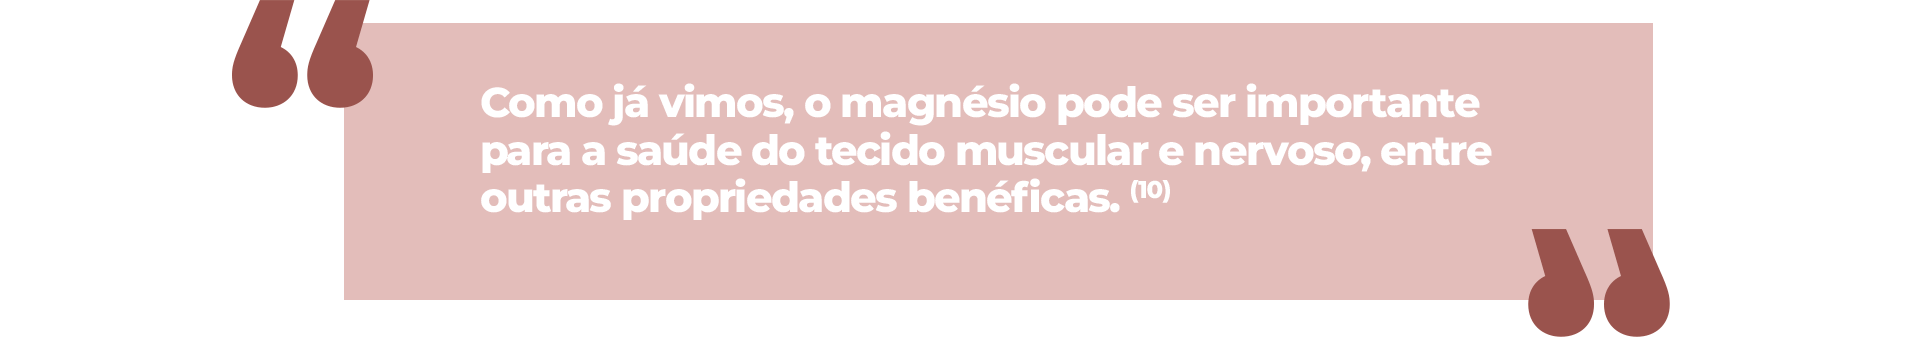 Como já vimos, o magnésio pode ser importante para a saúde do tecido muscular e nervoso, entre outras propriedades benéficas.”